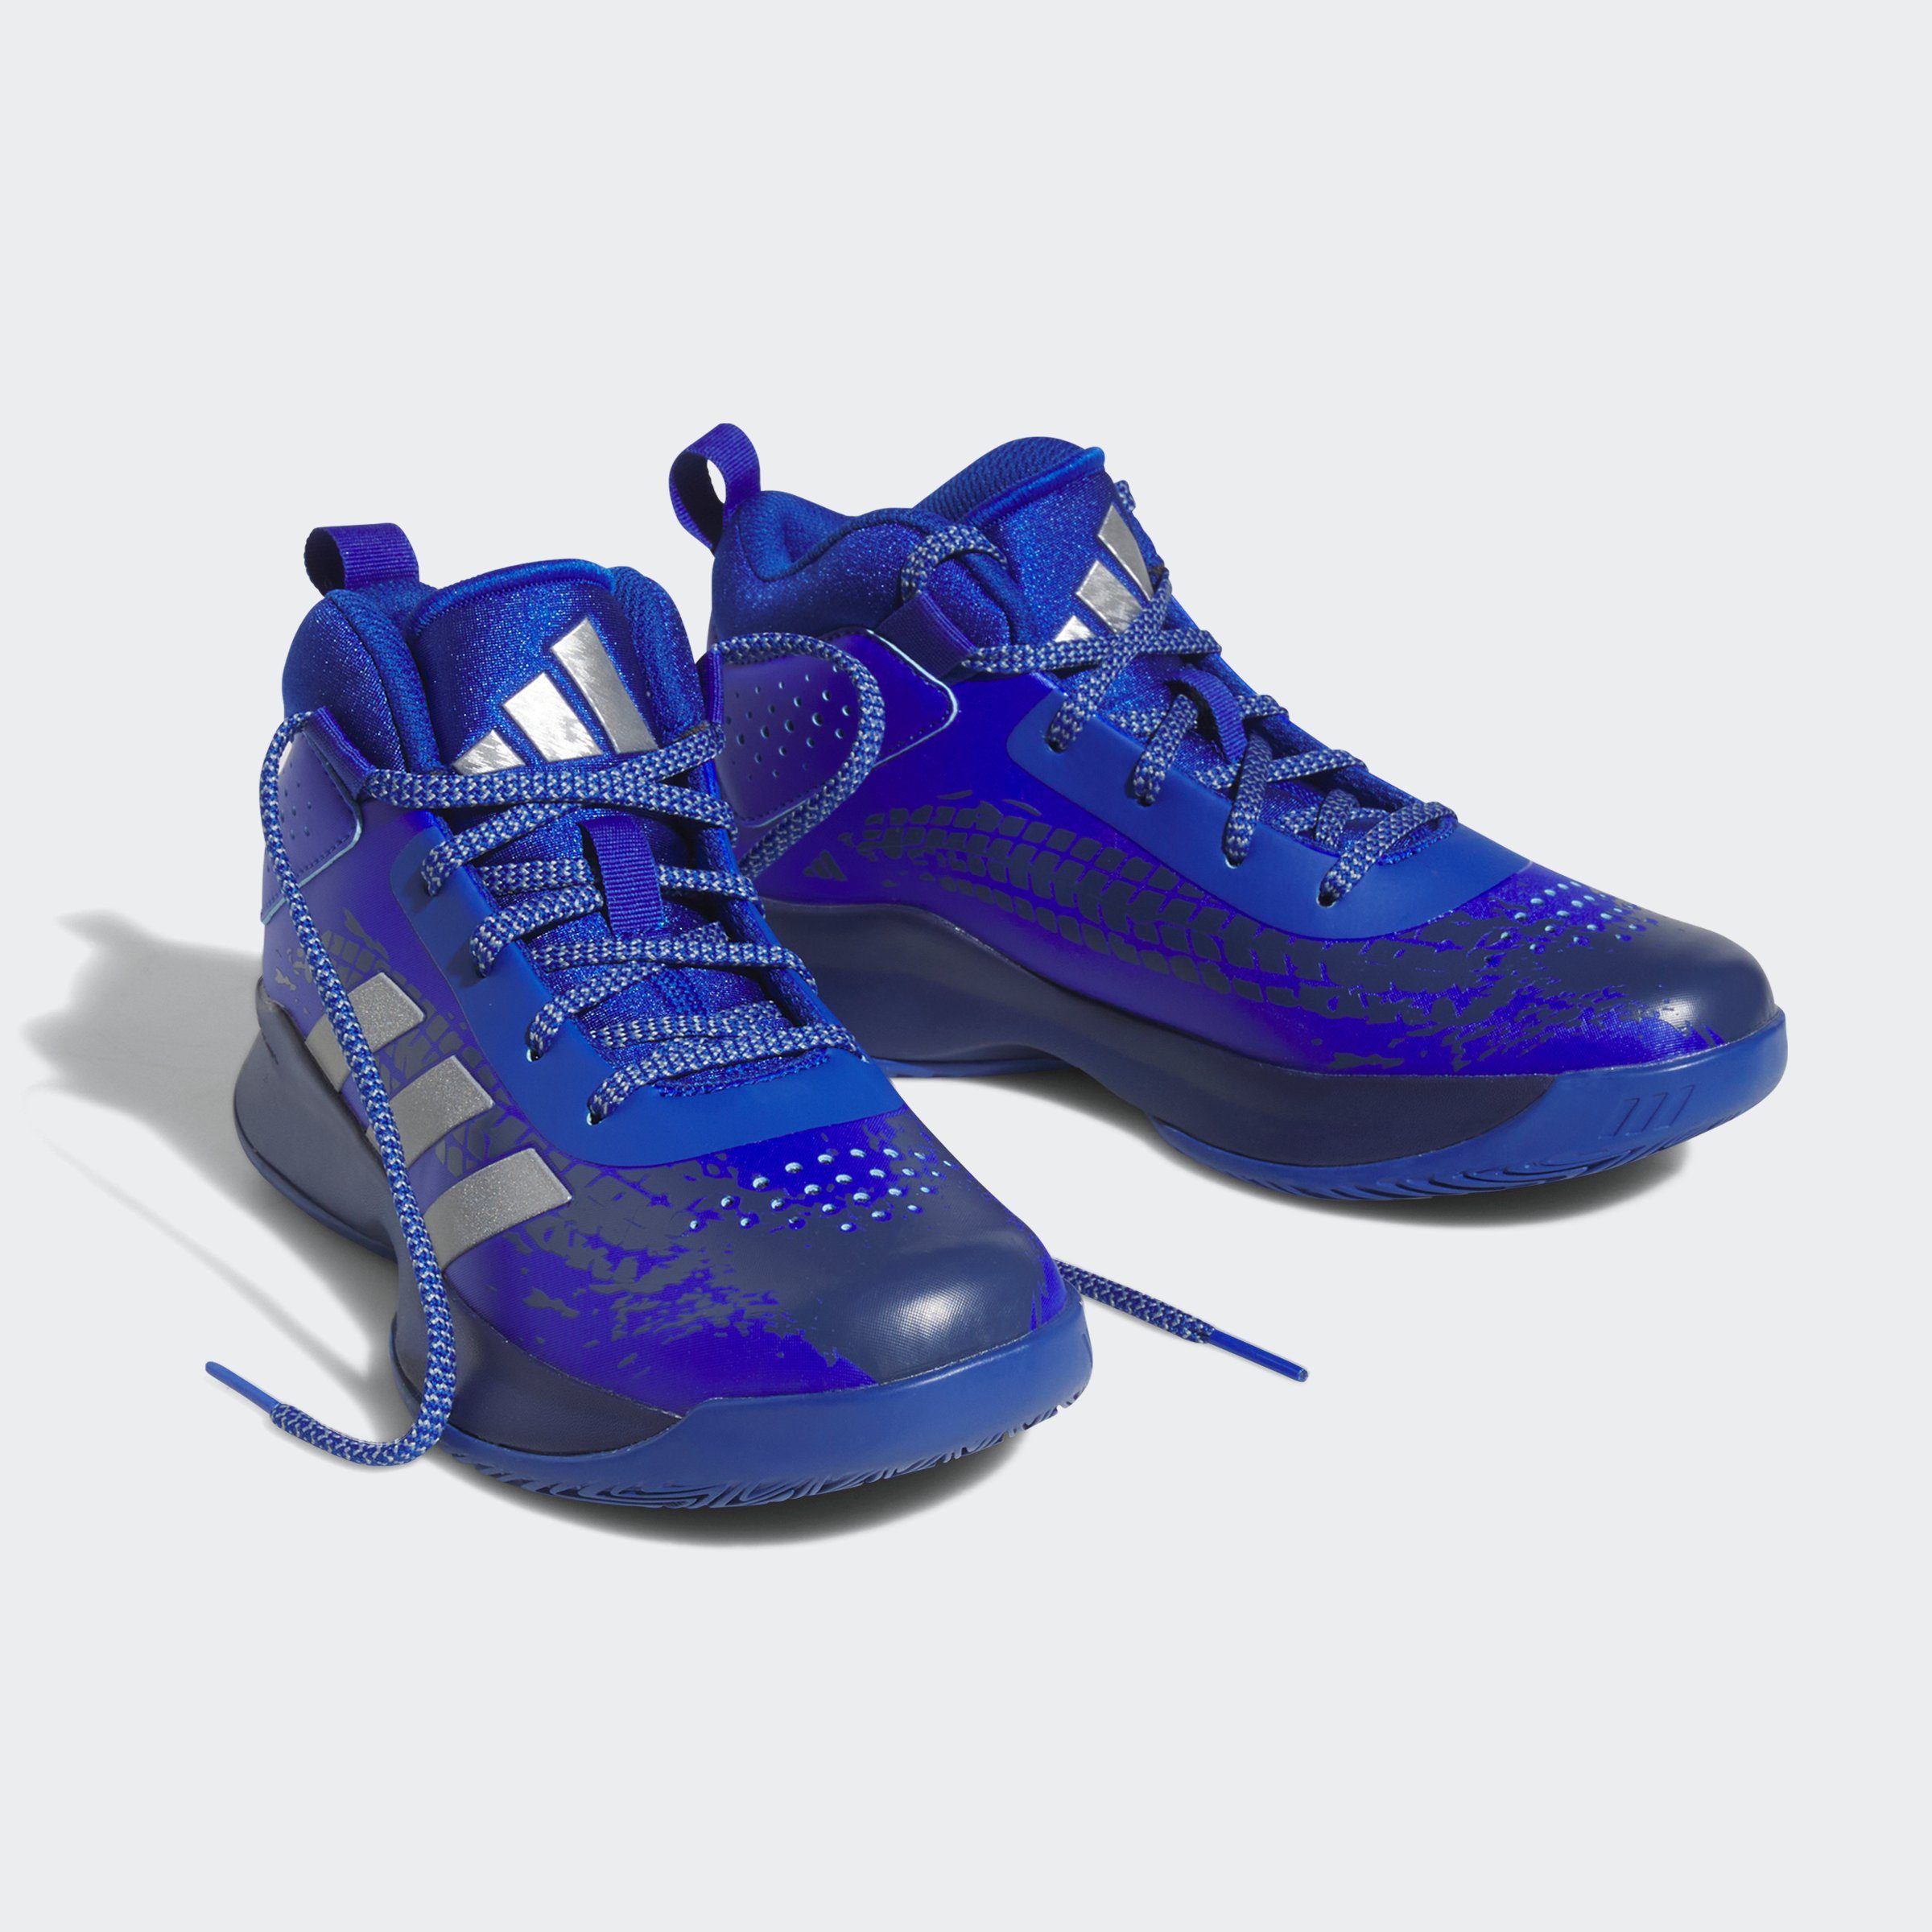 Victory Blue WIDE adidas Basketballschuh / / Silver 5 Metallic Blue Royal Performance CROSS EM UP